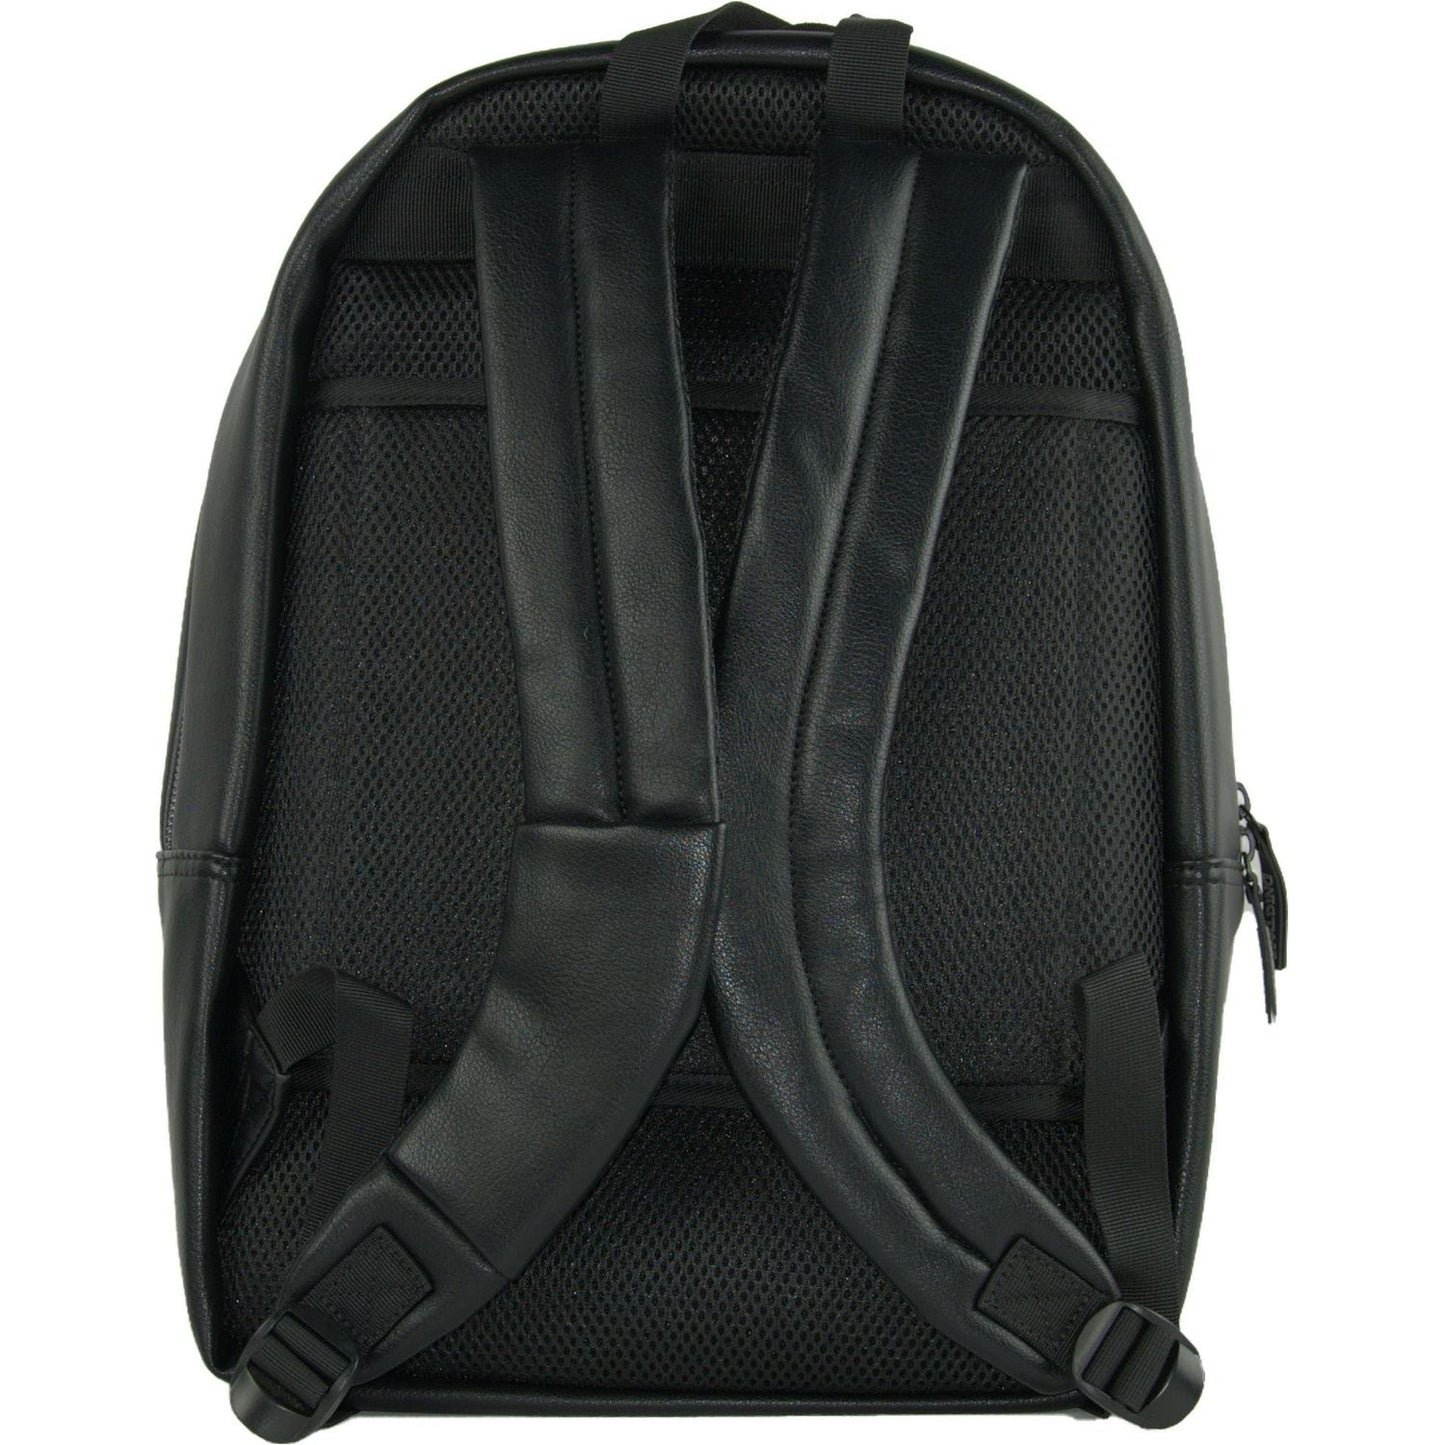 A.G. Spalding & Bros Sleek Black Pro Backpack For Men black-polyurethane-backpack-1 stock_product_image_748_490928934-873feef7-ea9.jpg